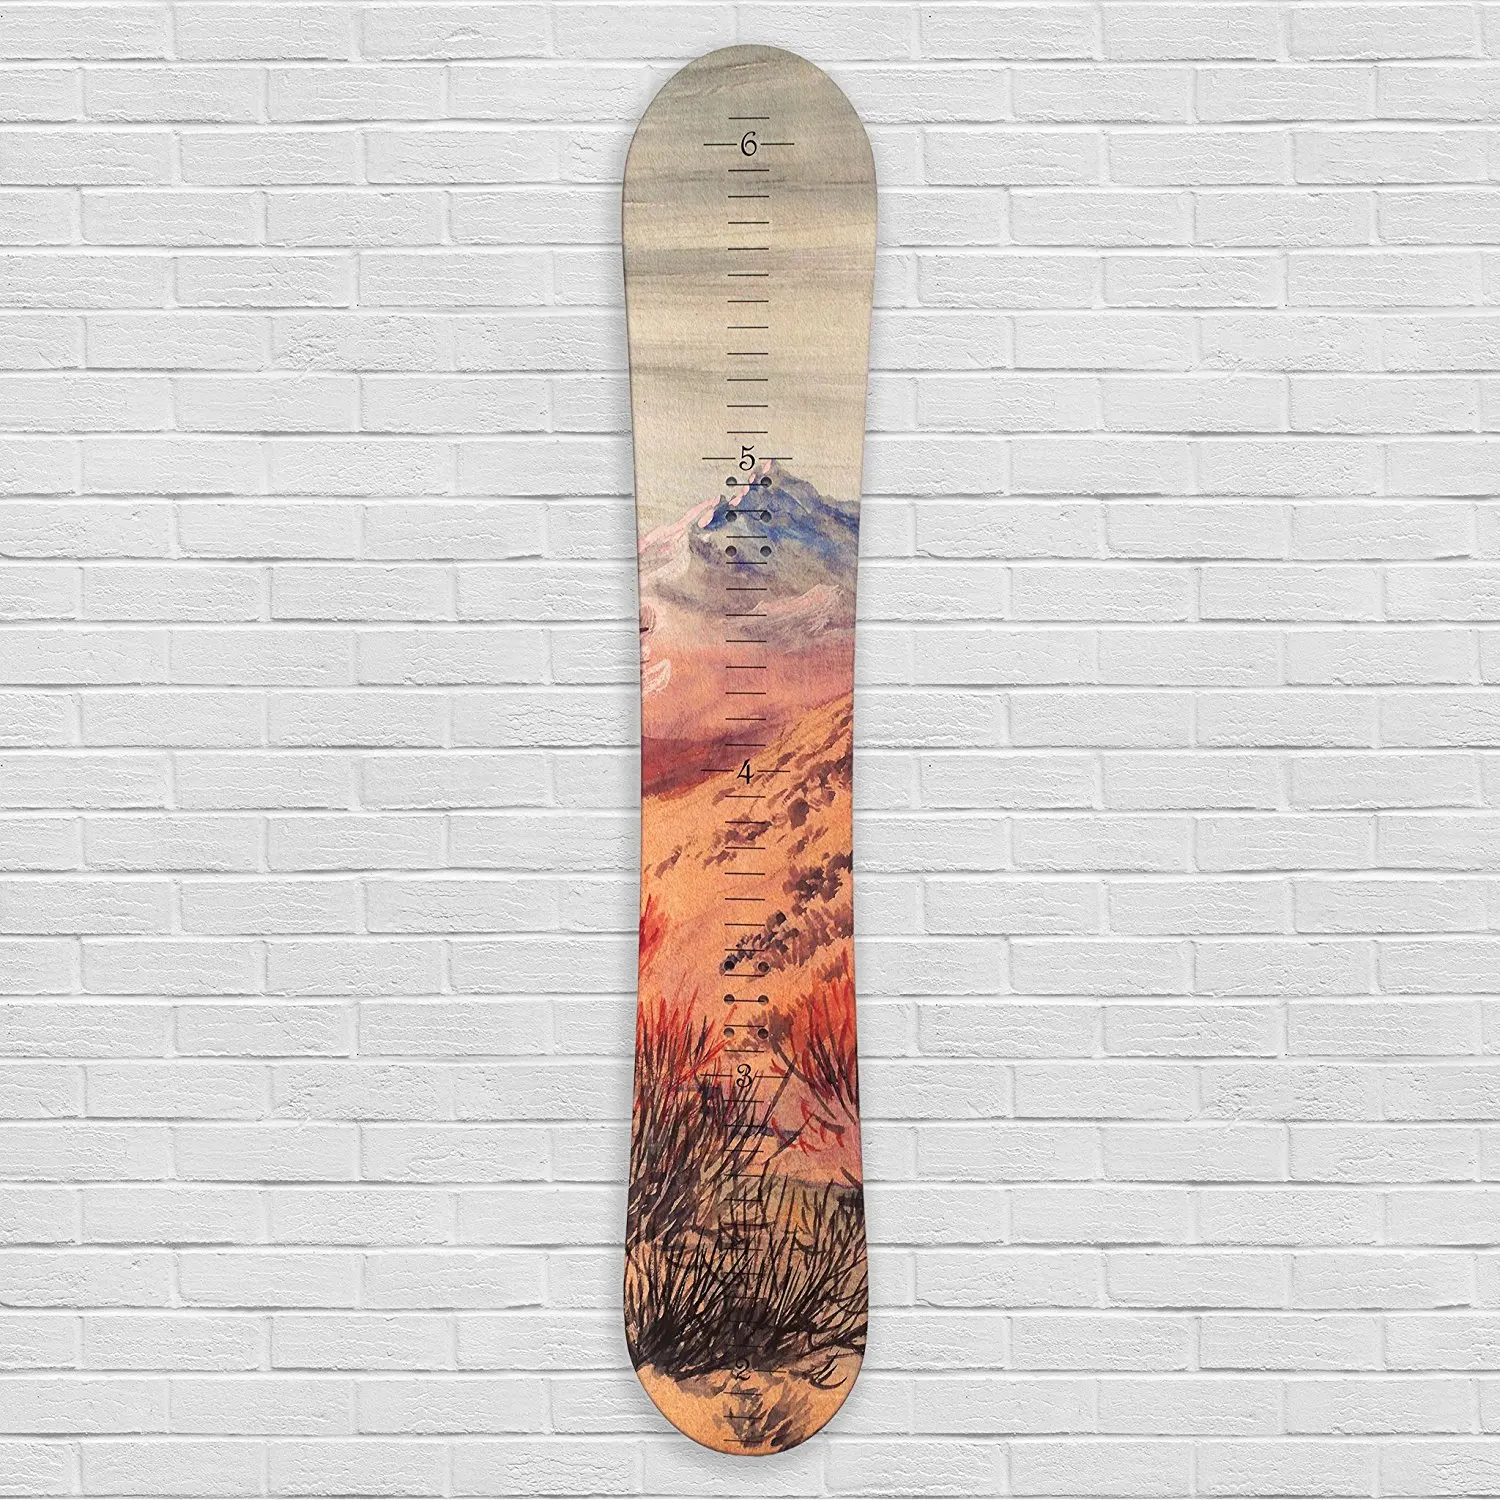 Rossignol Snowboards Size Chart